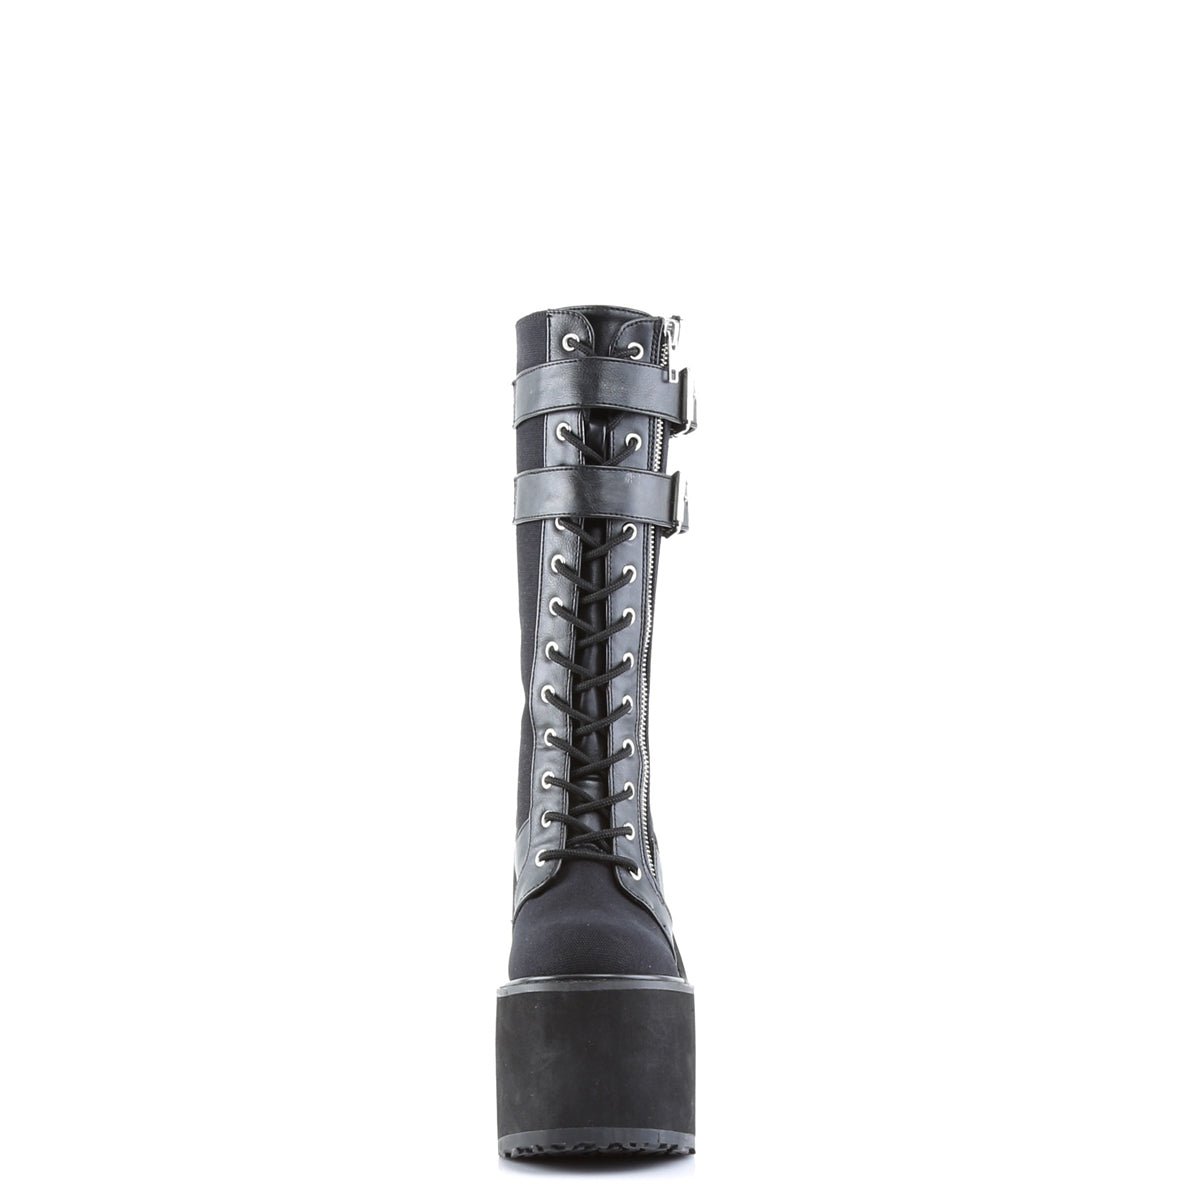 Too Fast | Demonia Swing 221 | Black Canvas & Vegan Leather Women's Knee High Boots